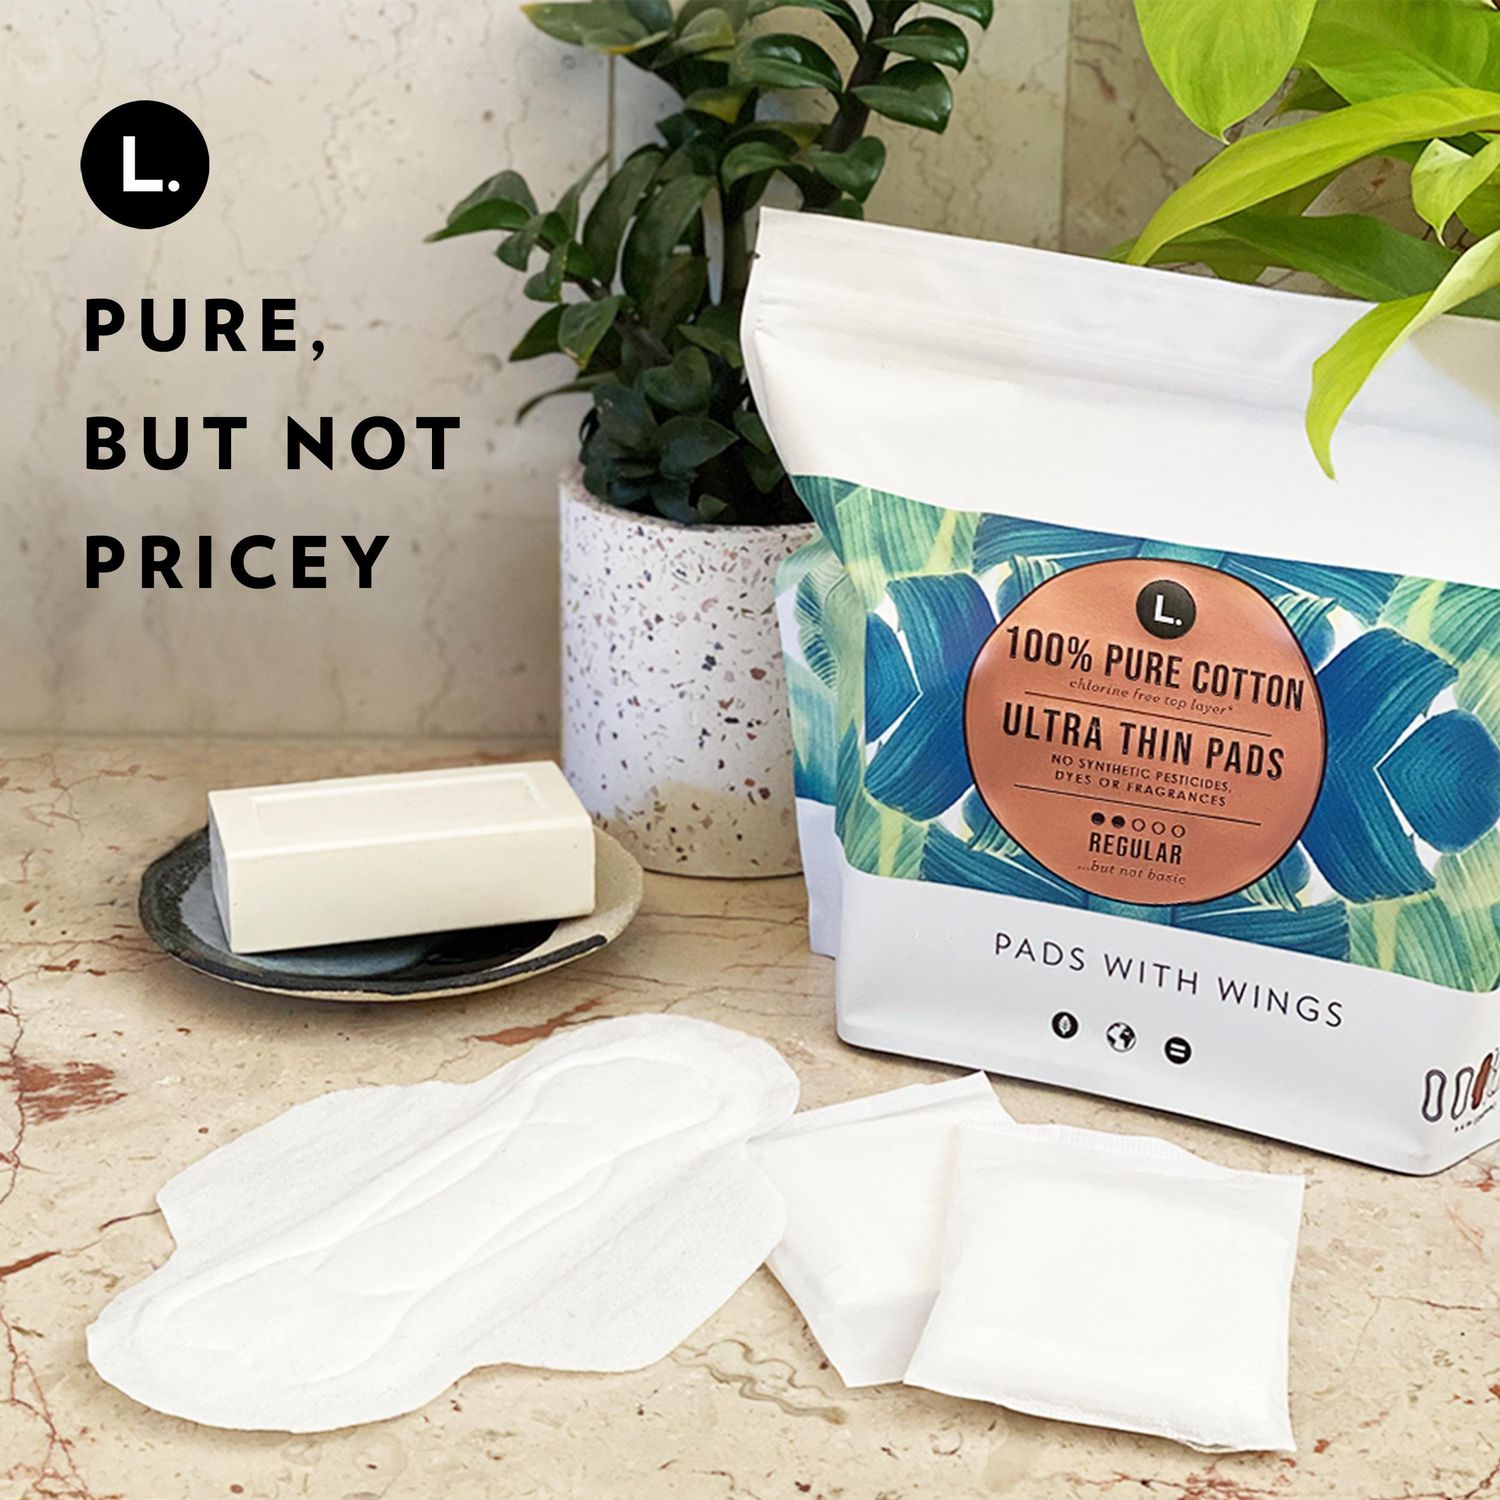 L. Organic Cotton, Chlorine Free, Ultra Thin Pads - Super (28 - Import It  All